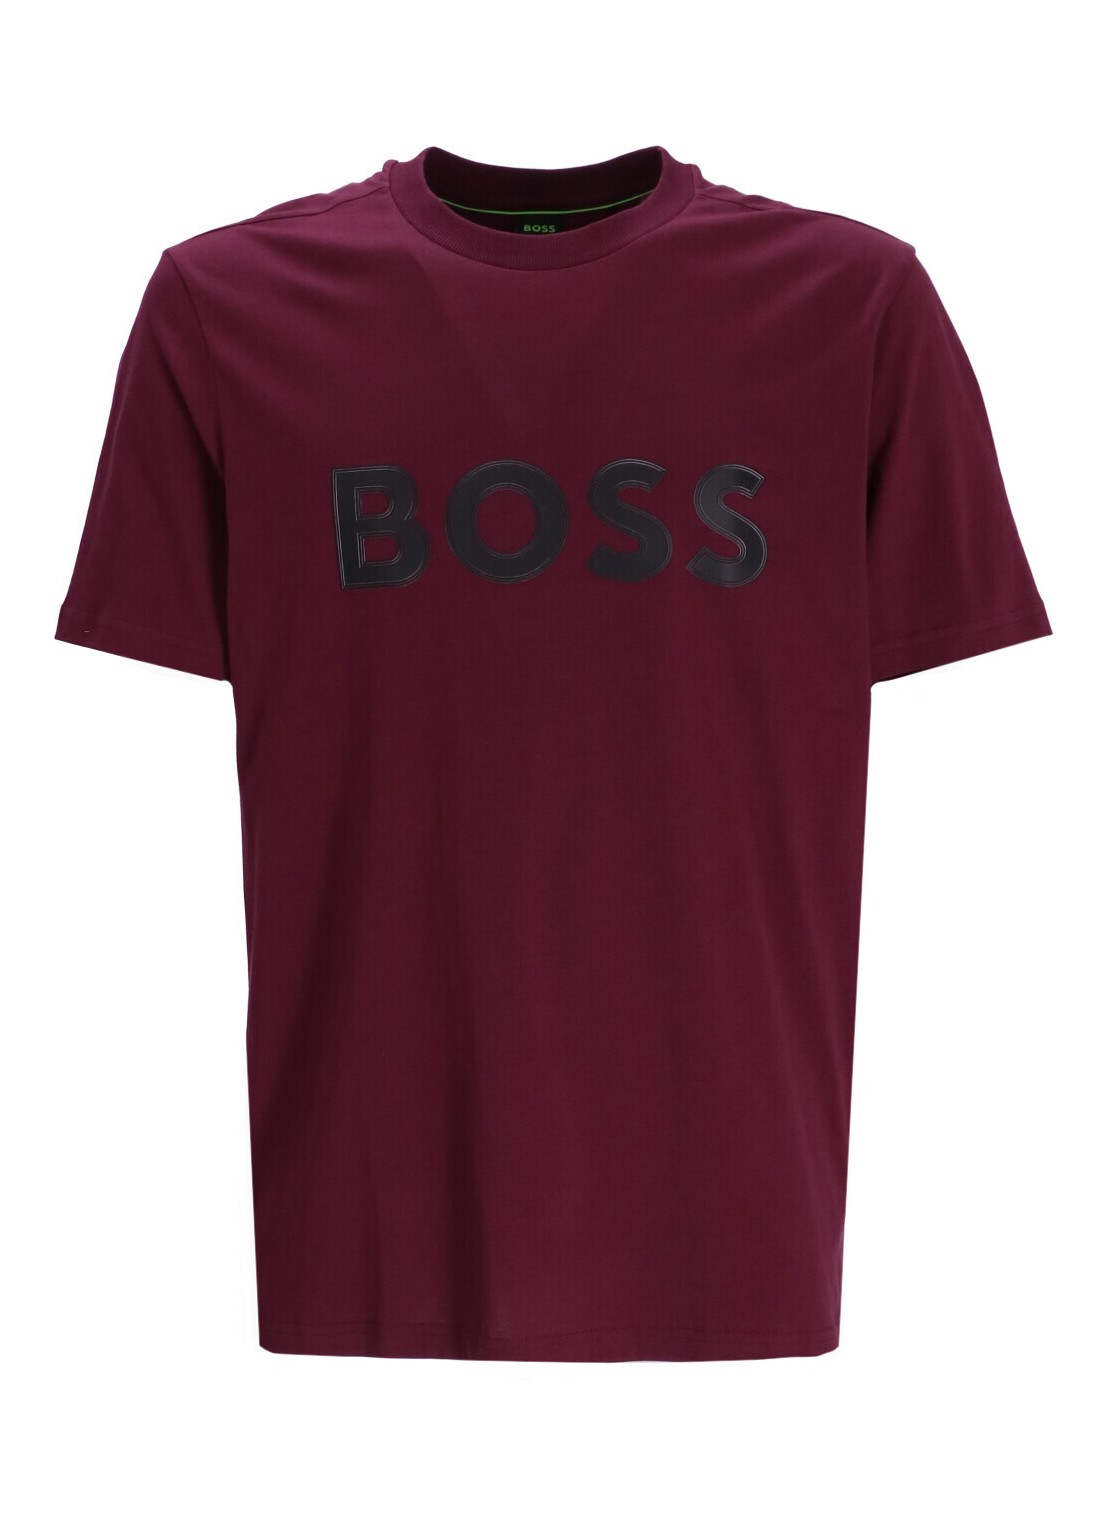 Camiseta boss t-shirt mantee 1 - 50506344 697 talla XXL
 